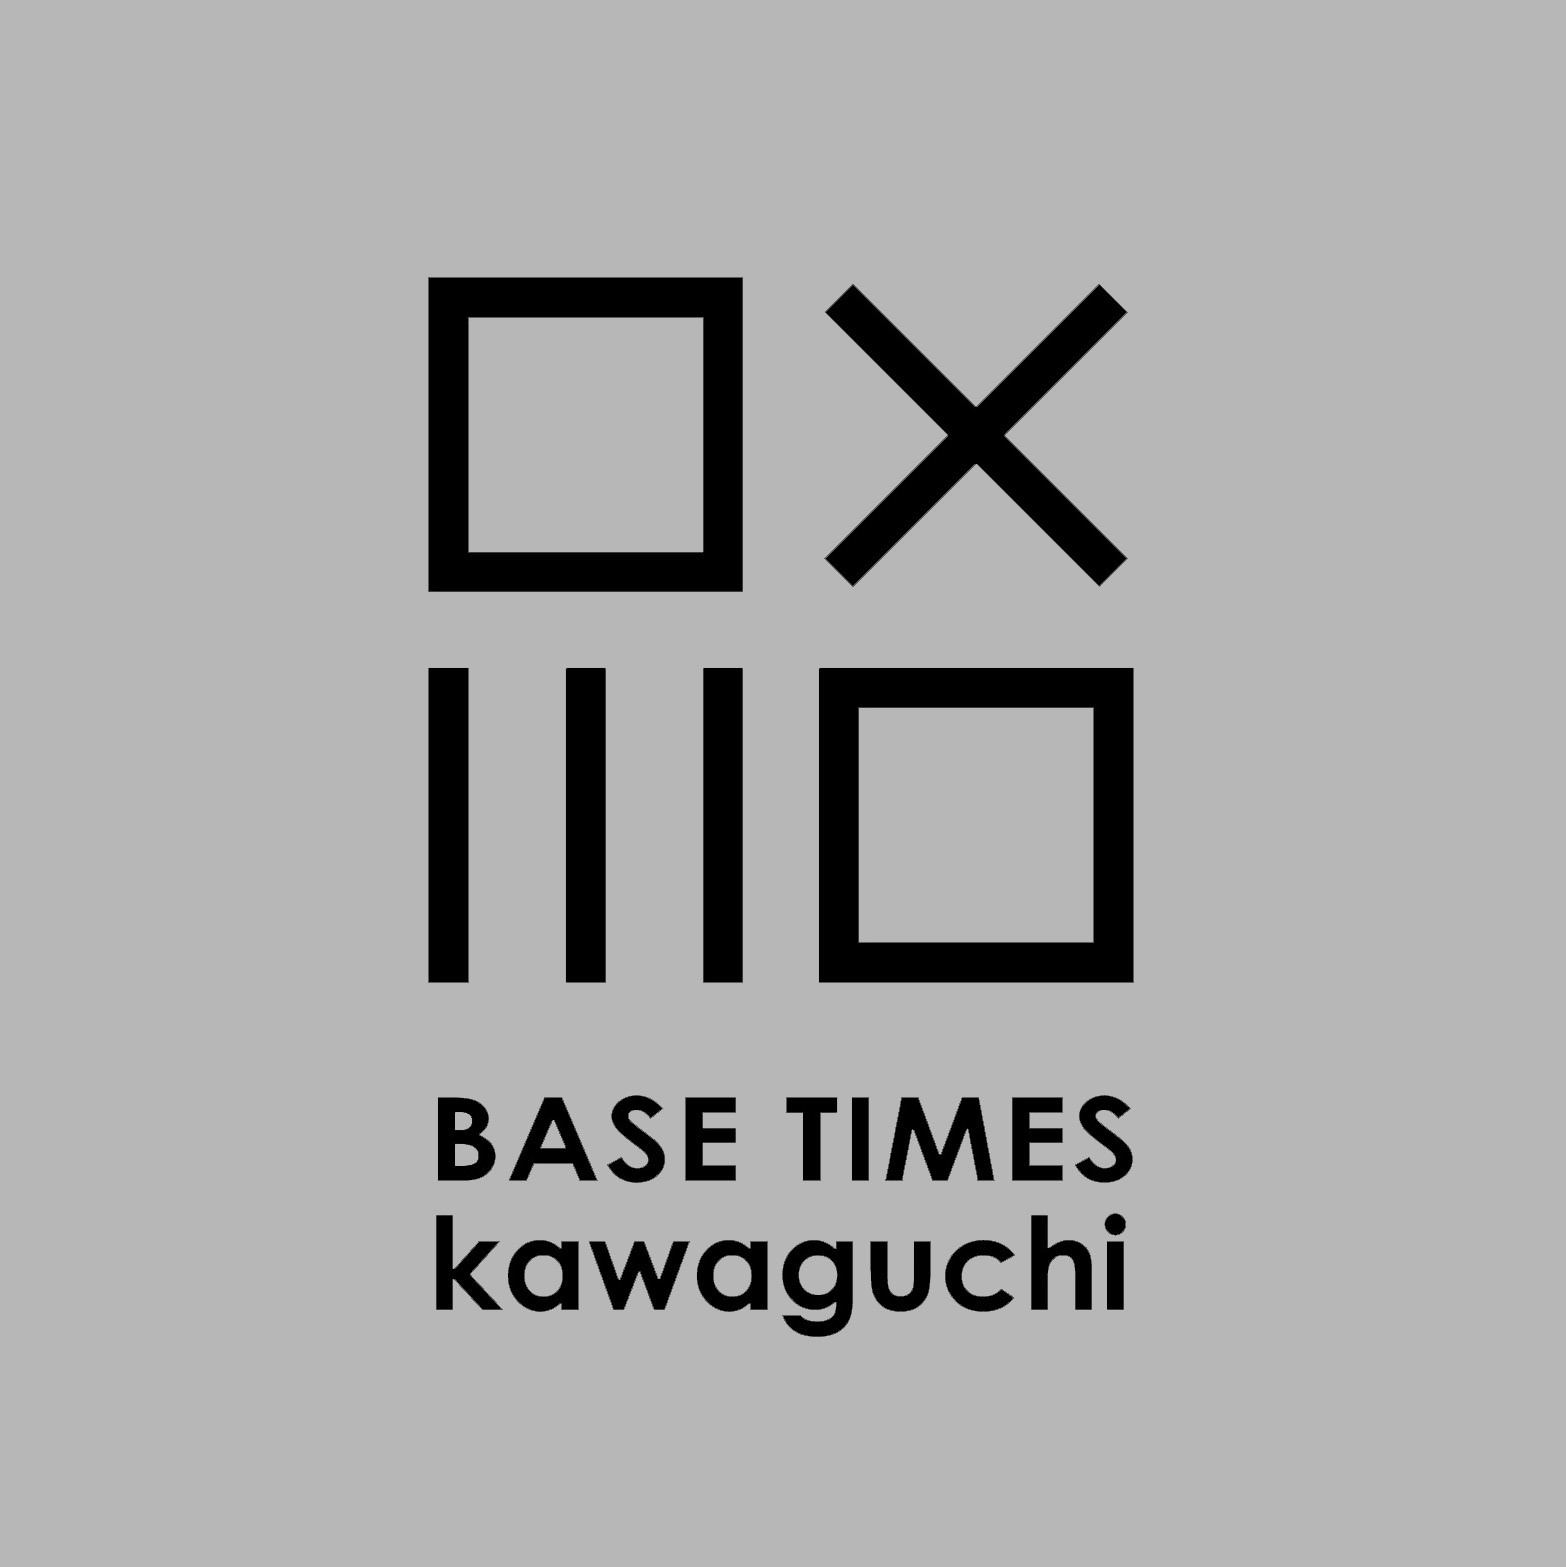 BASE TIMES kawaguchi